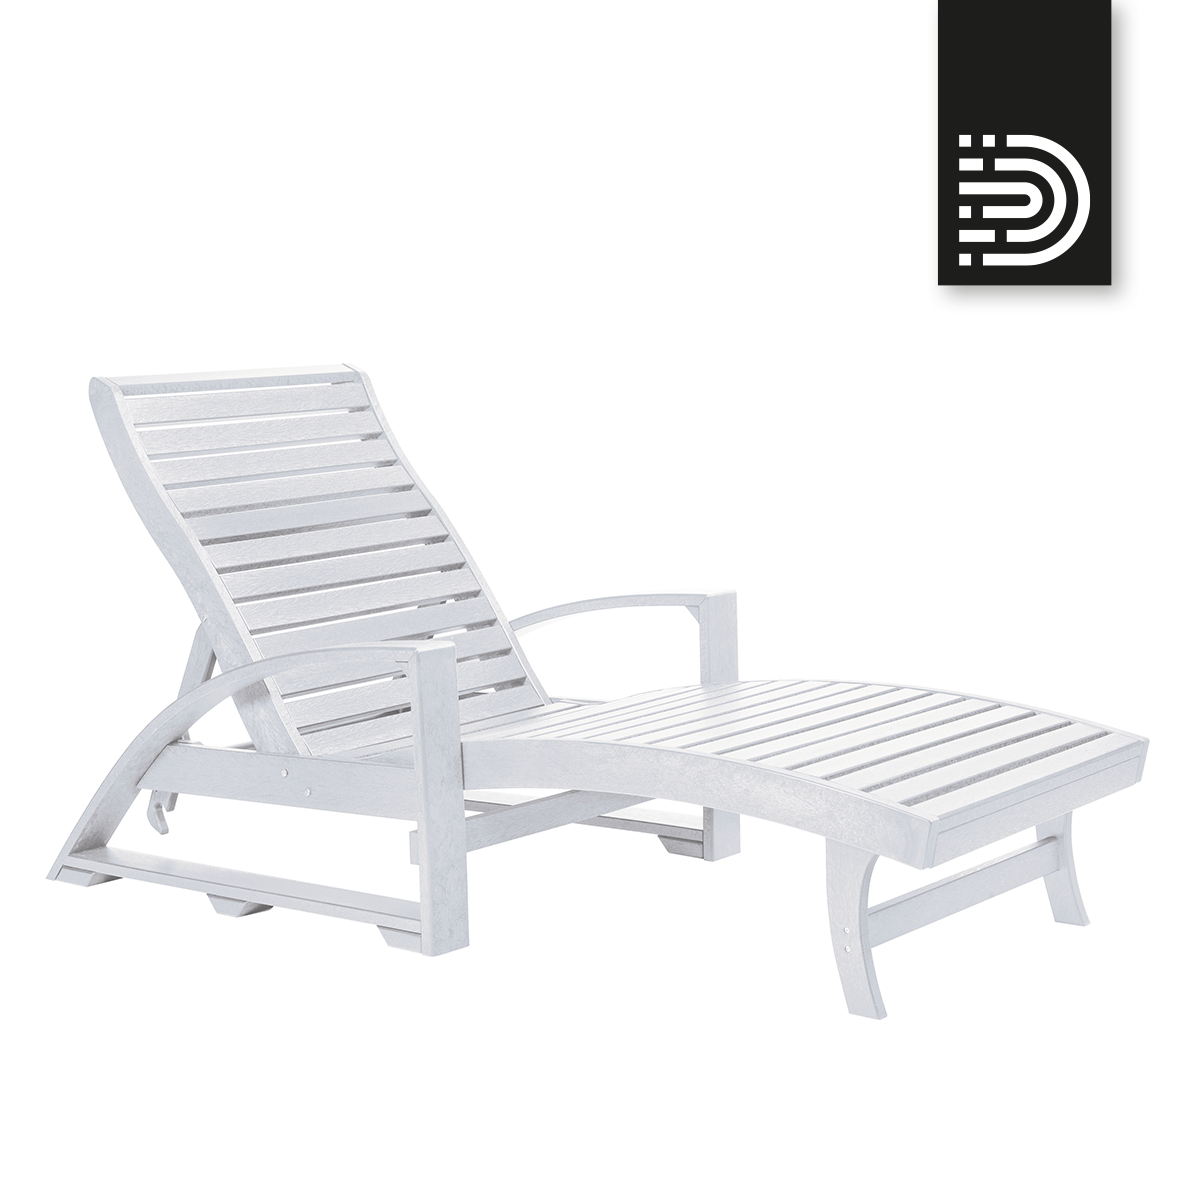 L38 Chaise Lounge w/ Hidden Wheels - white 02